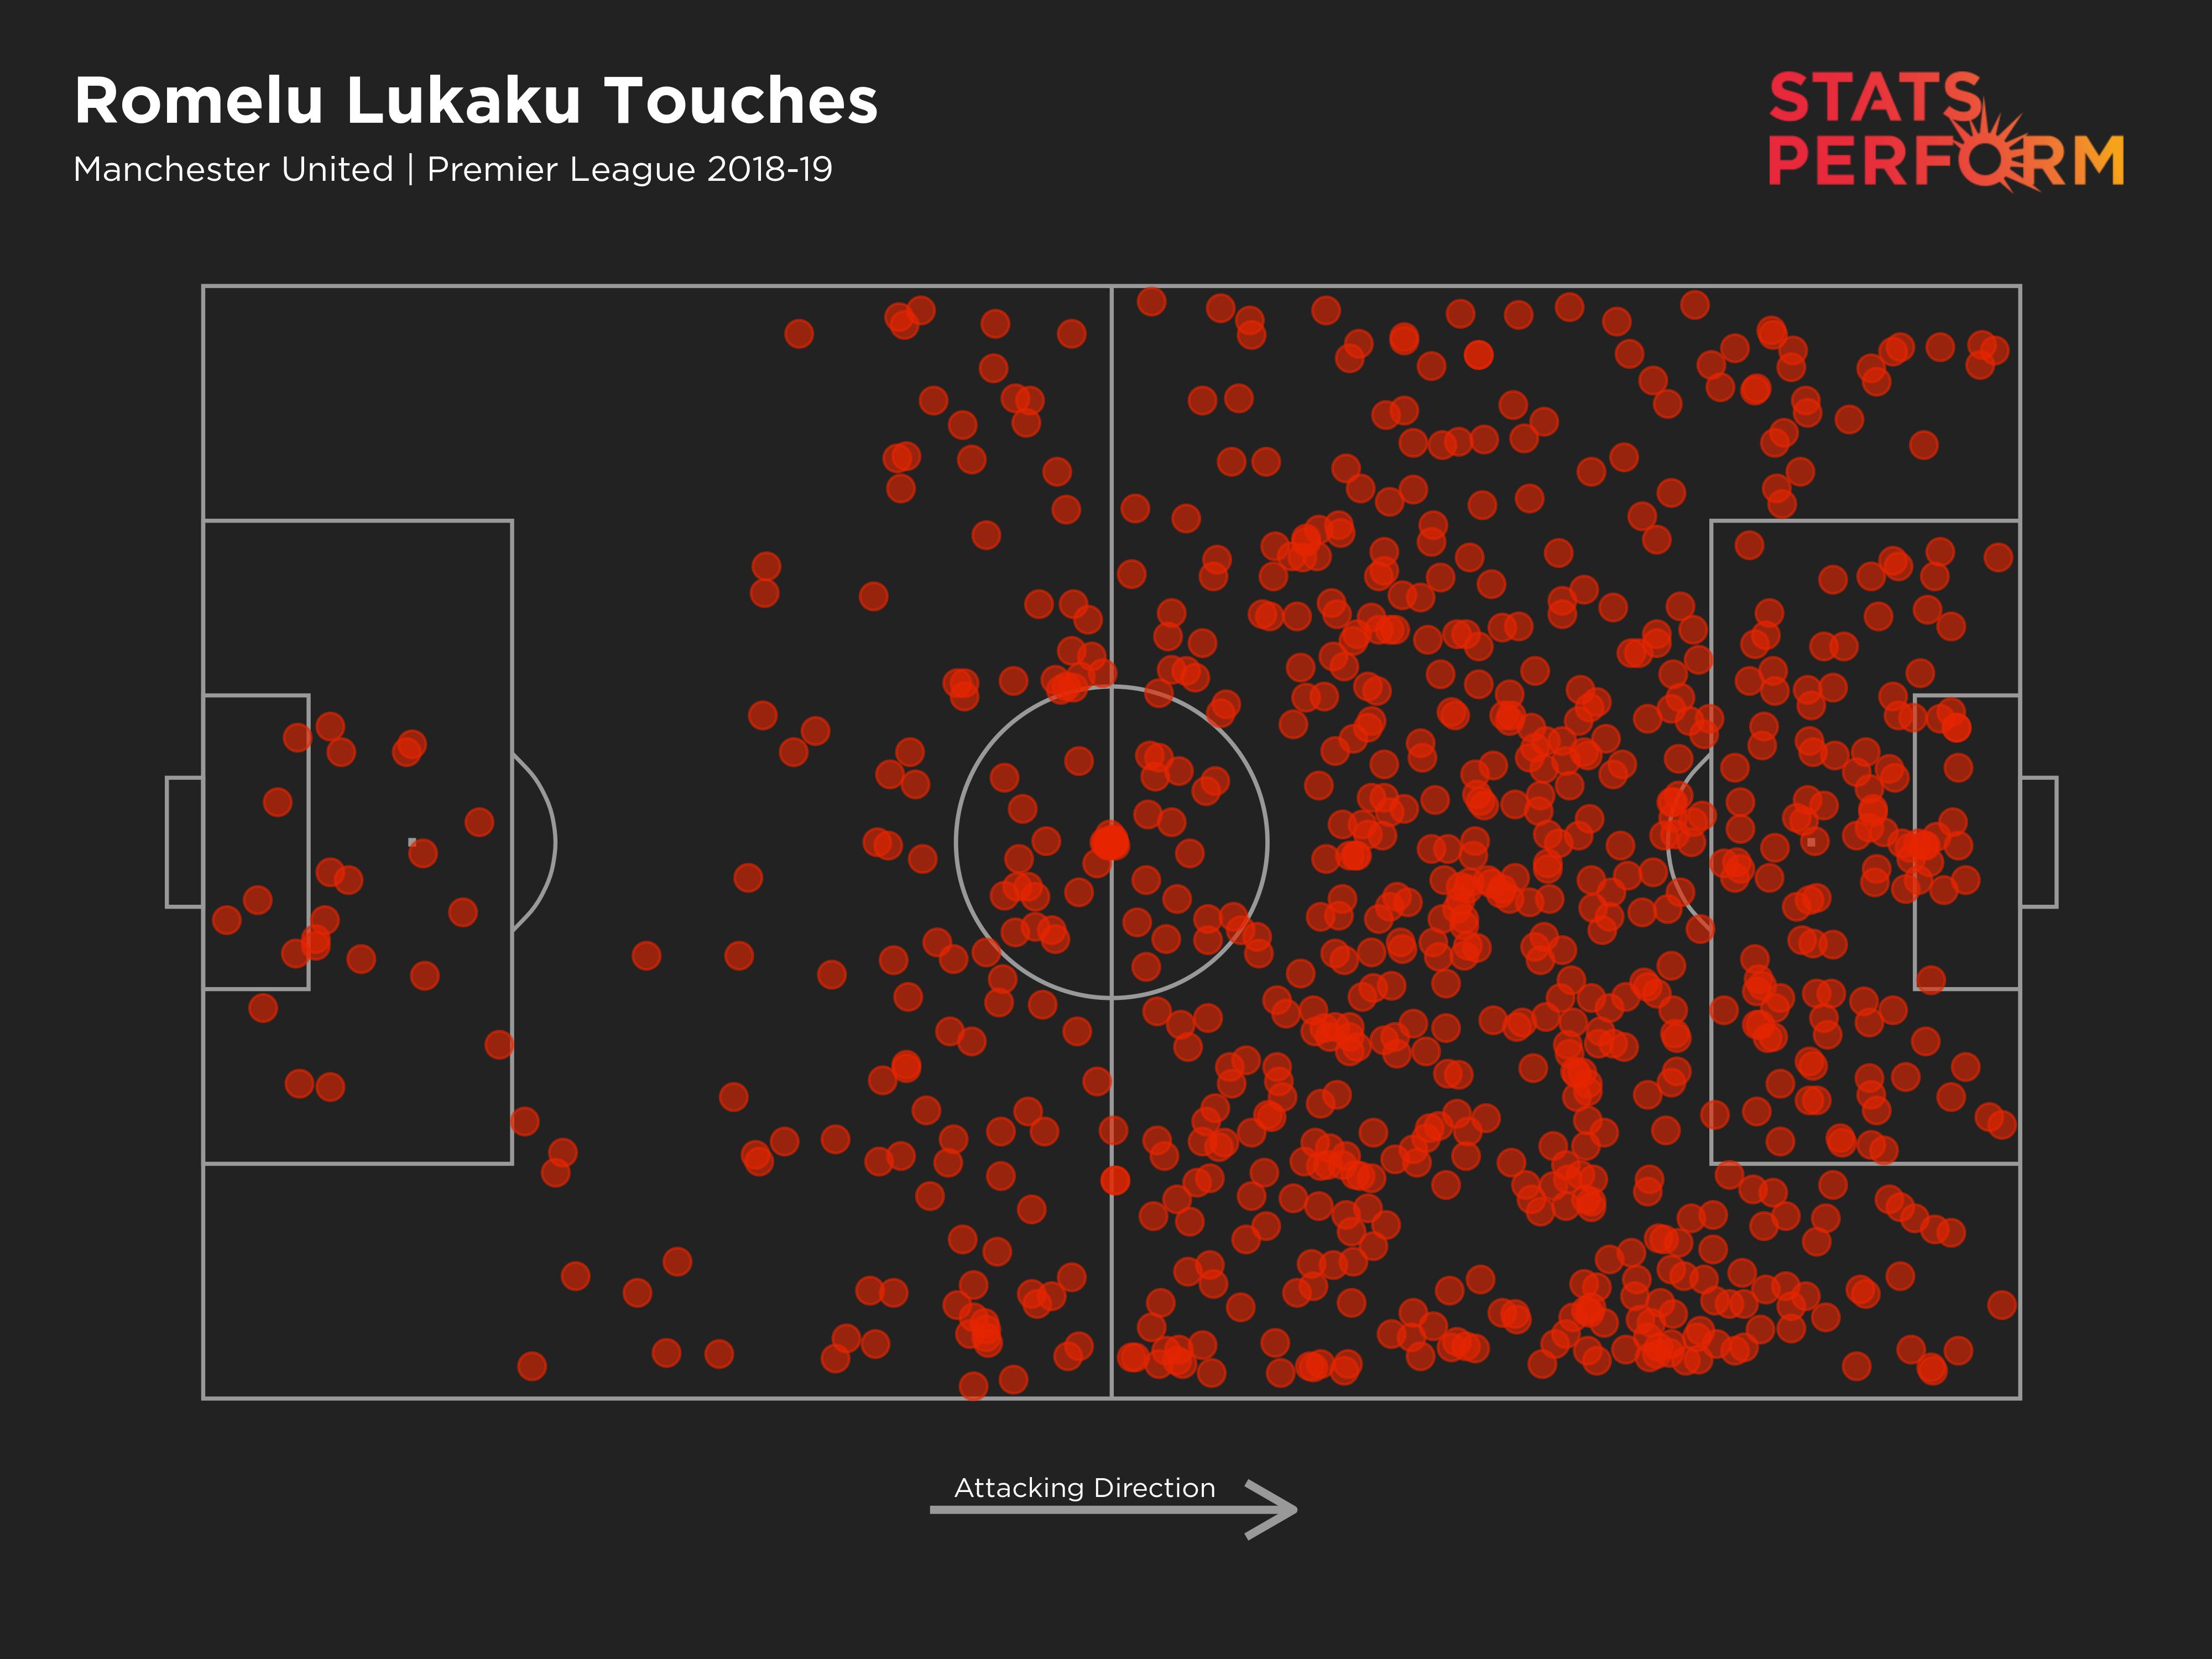 Romelu Lukaku's impact at Old Trafford was underwhelming